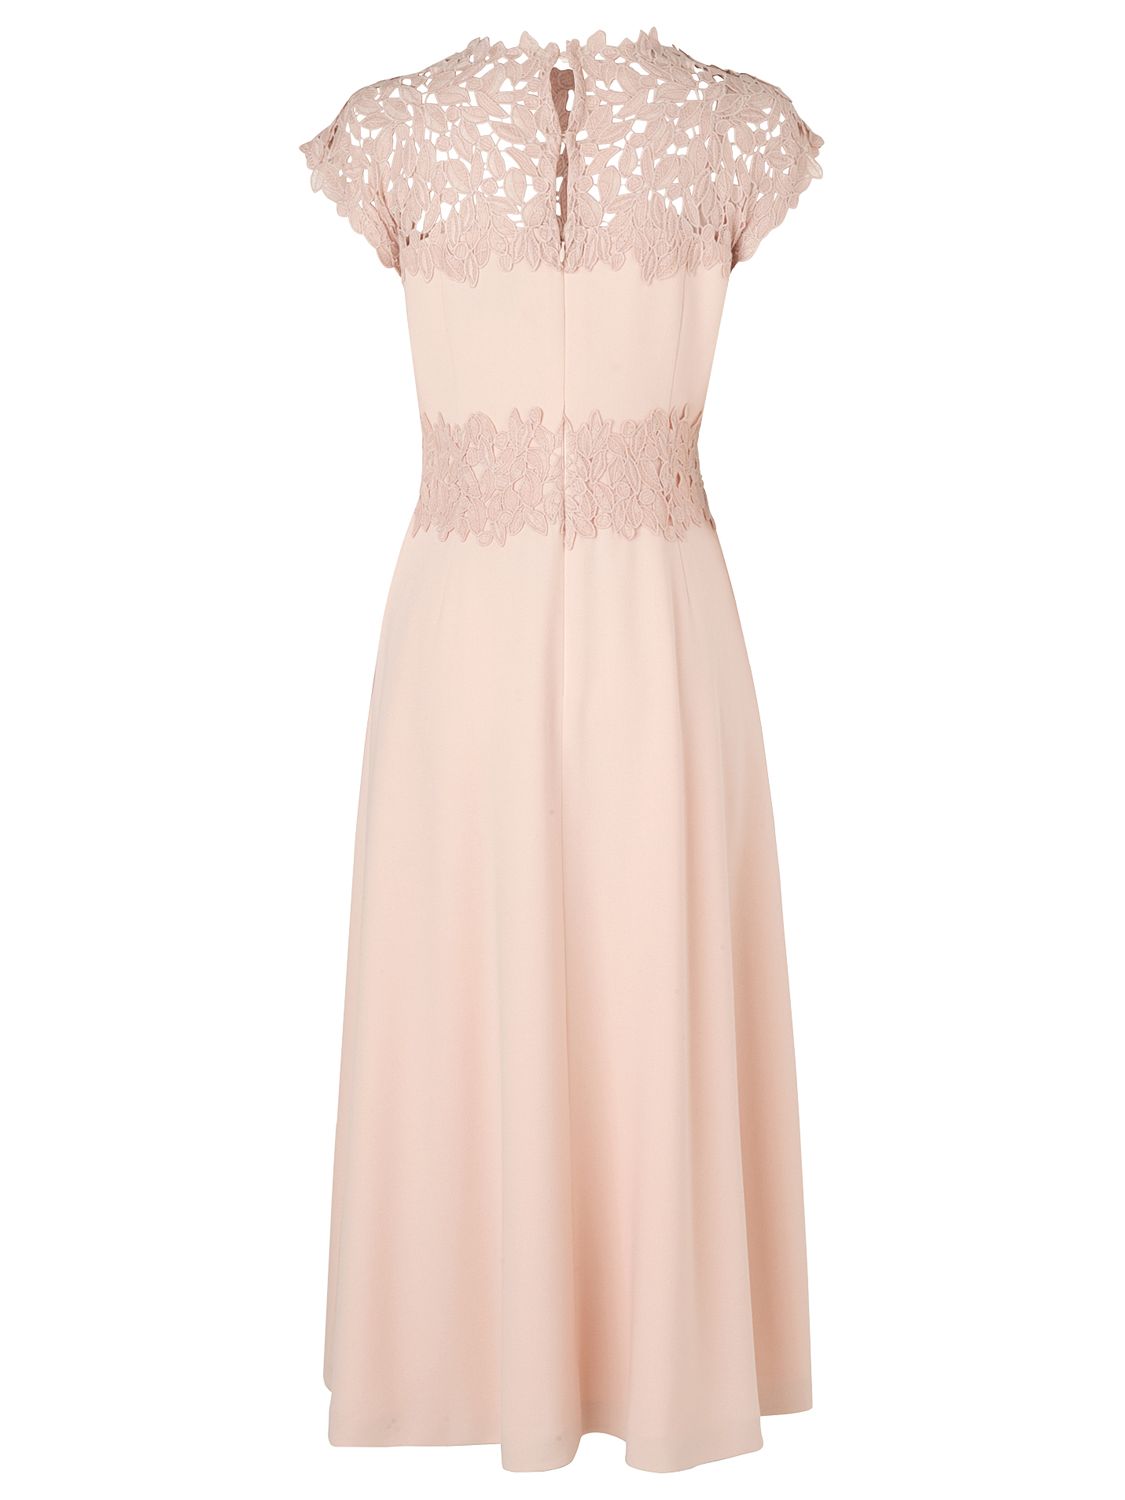 L.K. Bennett Selene Lace Crepe Dress, Pale Pink